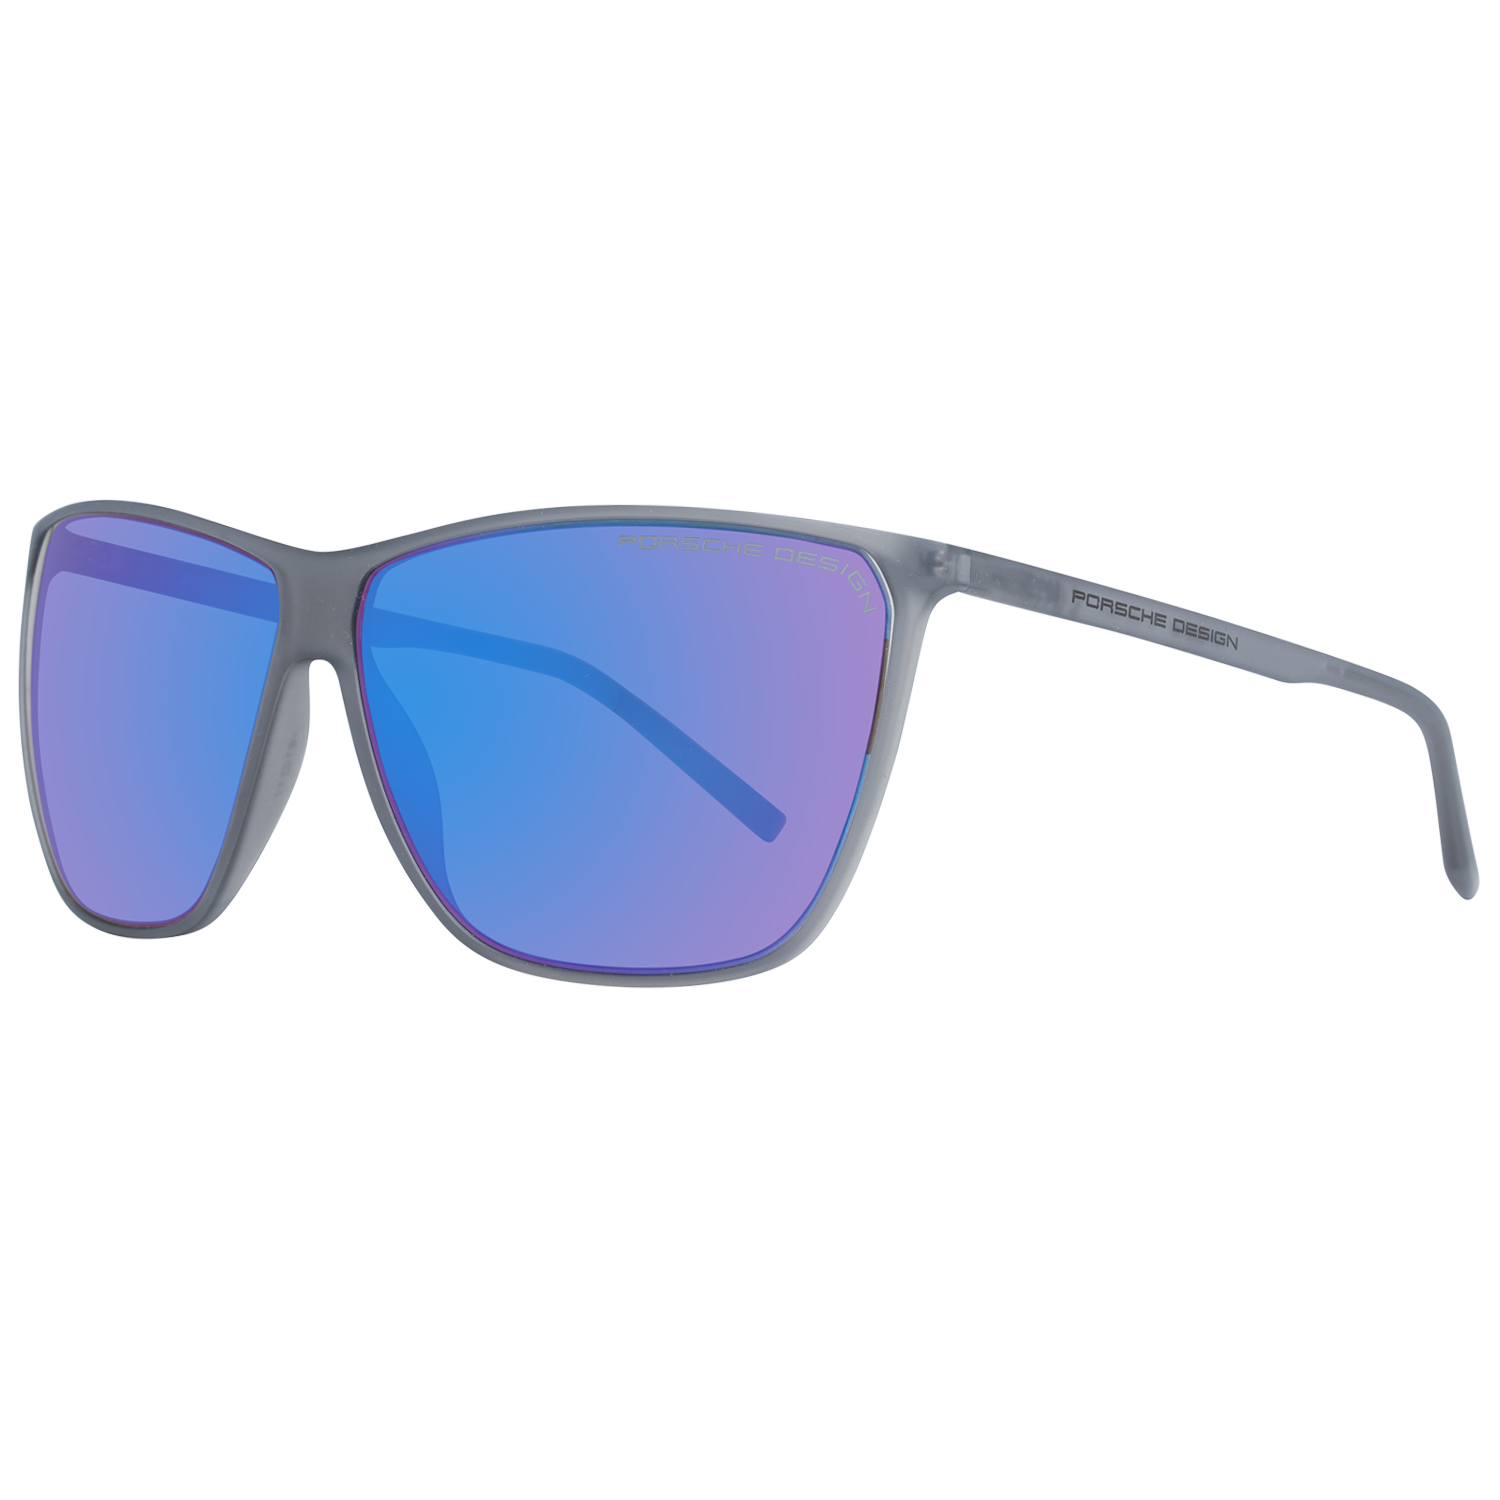 Porsche Design Sunglasses Porsche Design Sunglasses P8612 C 61mm Eyeglasses Eyewear UK USA Australia 